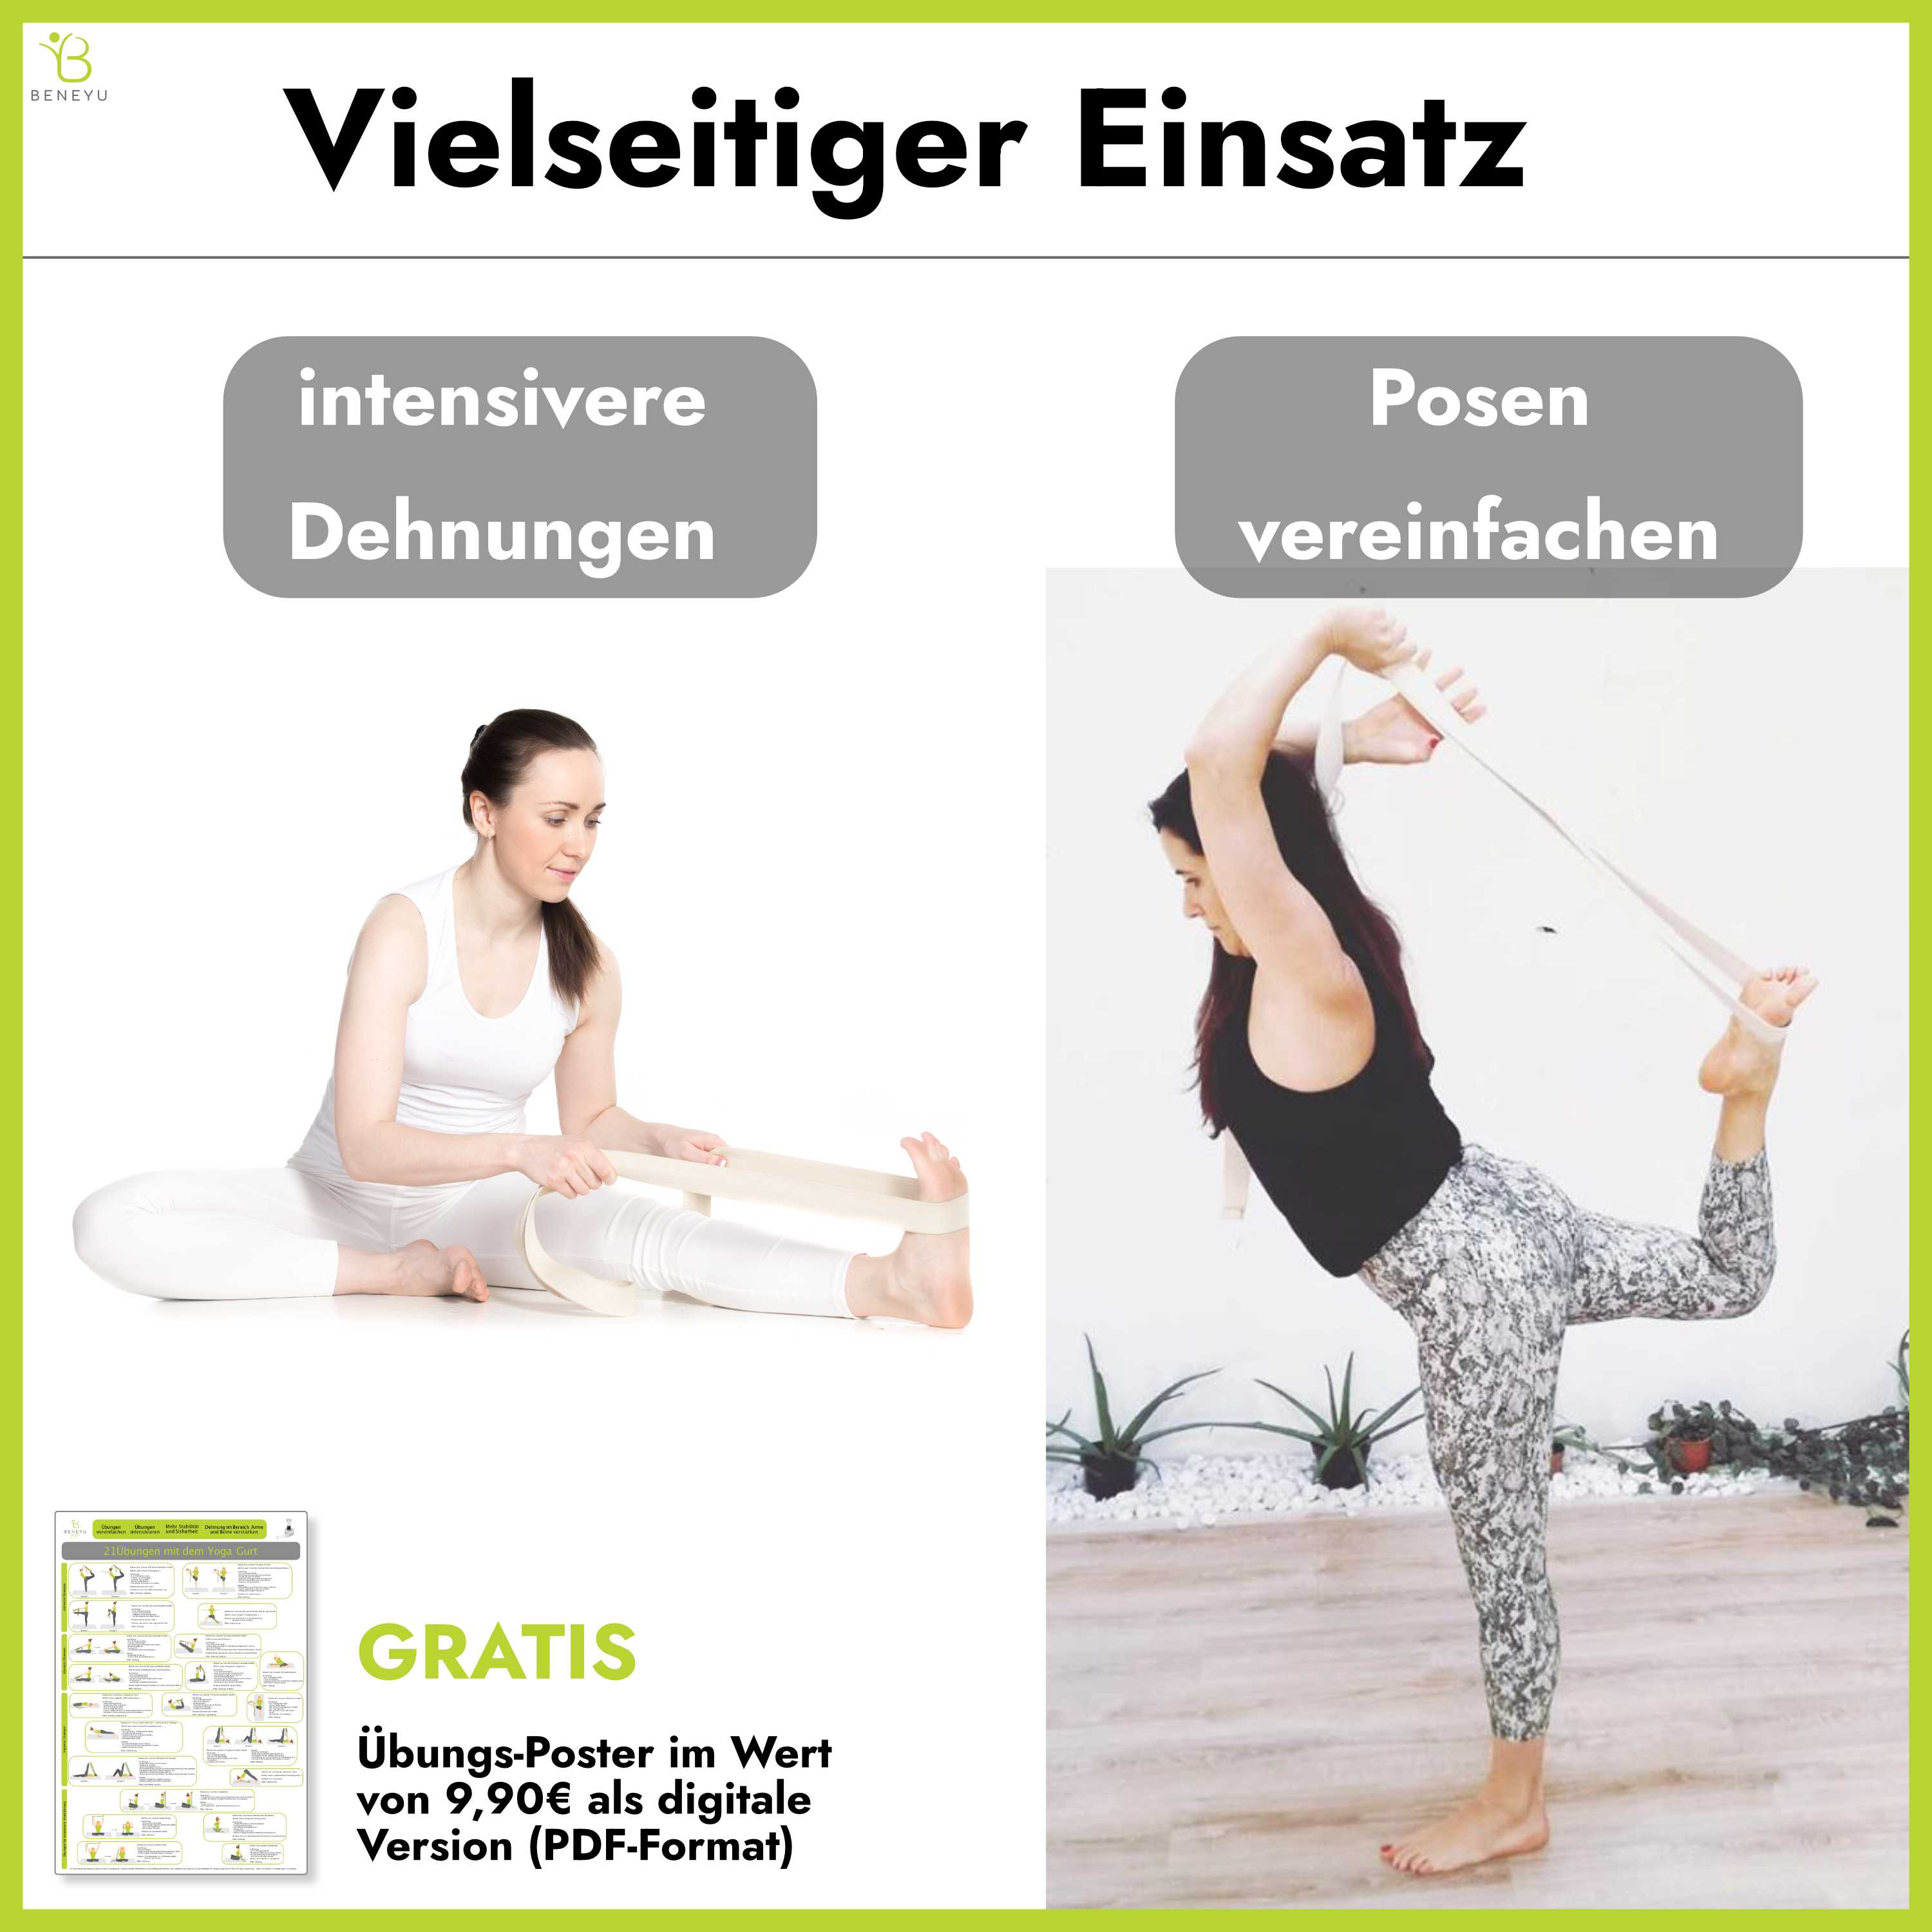 Rutschfester Yoga Gurt - Made in Germany